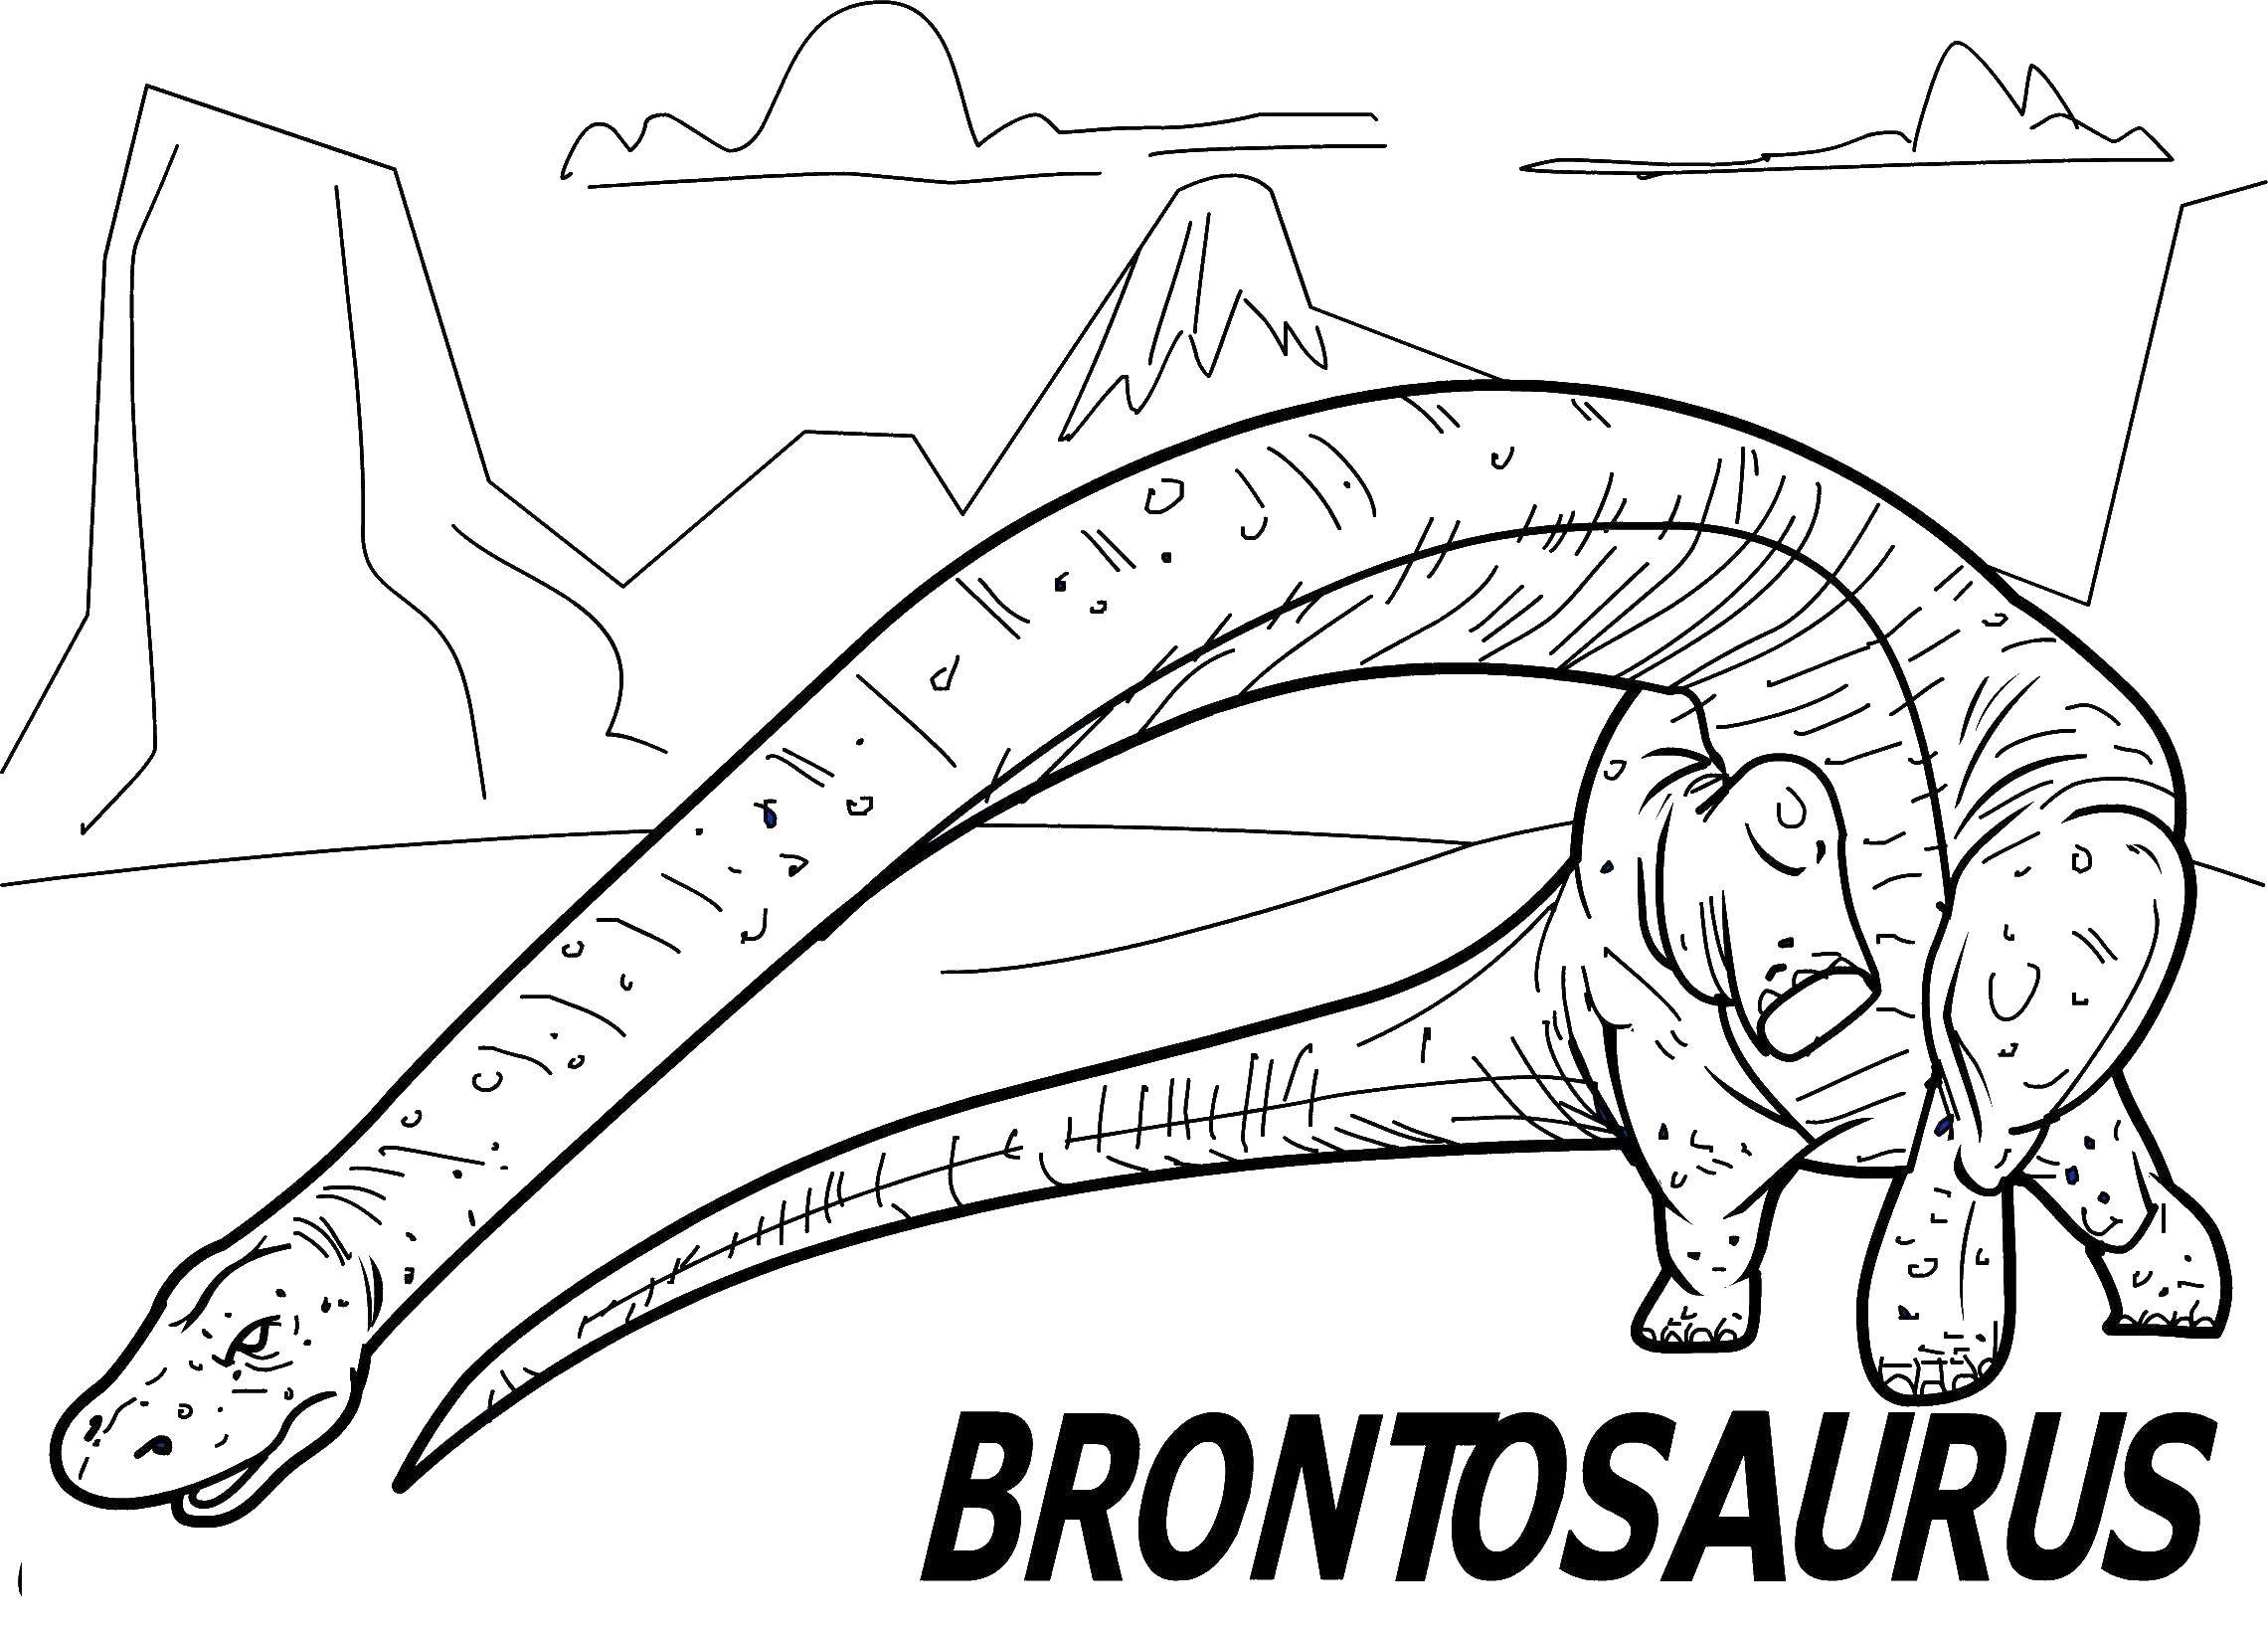 Coloring Dinosaur Brontosaurus. Category dinosaur. Tags:  Dinosaur, Brontosaurus.